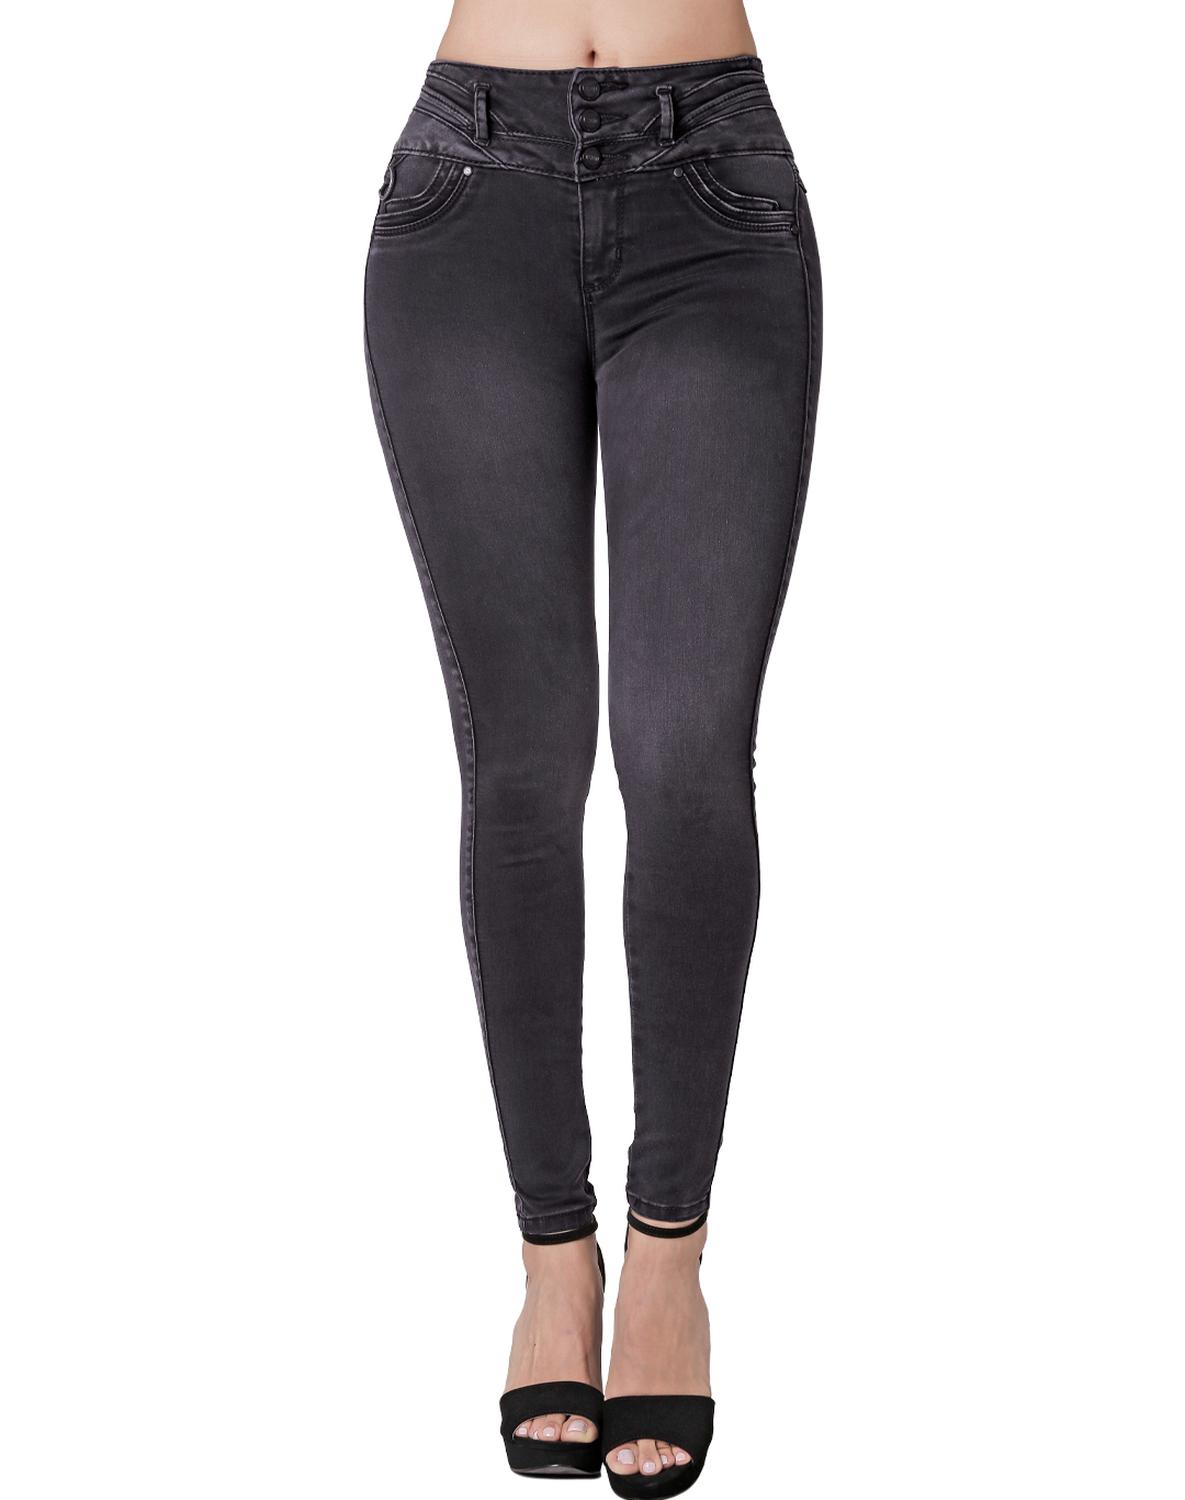 Jeans Moda Skinny Mujer Gris Fergino 52904628